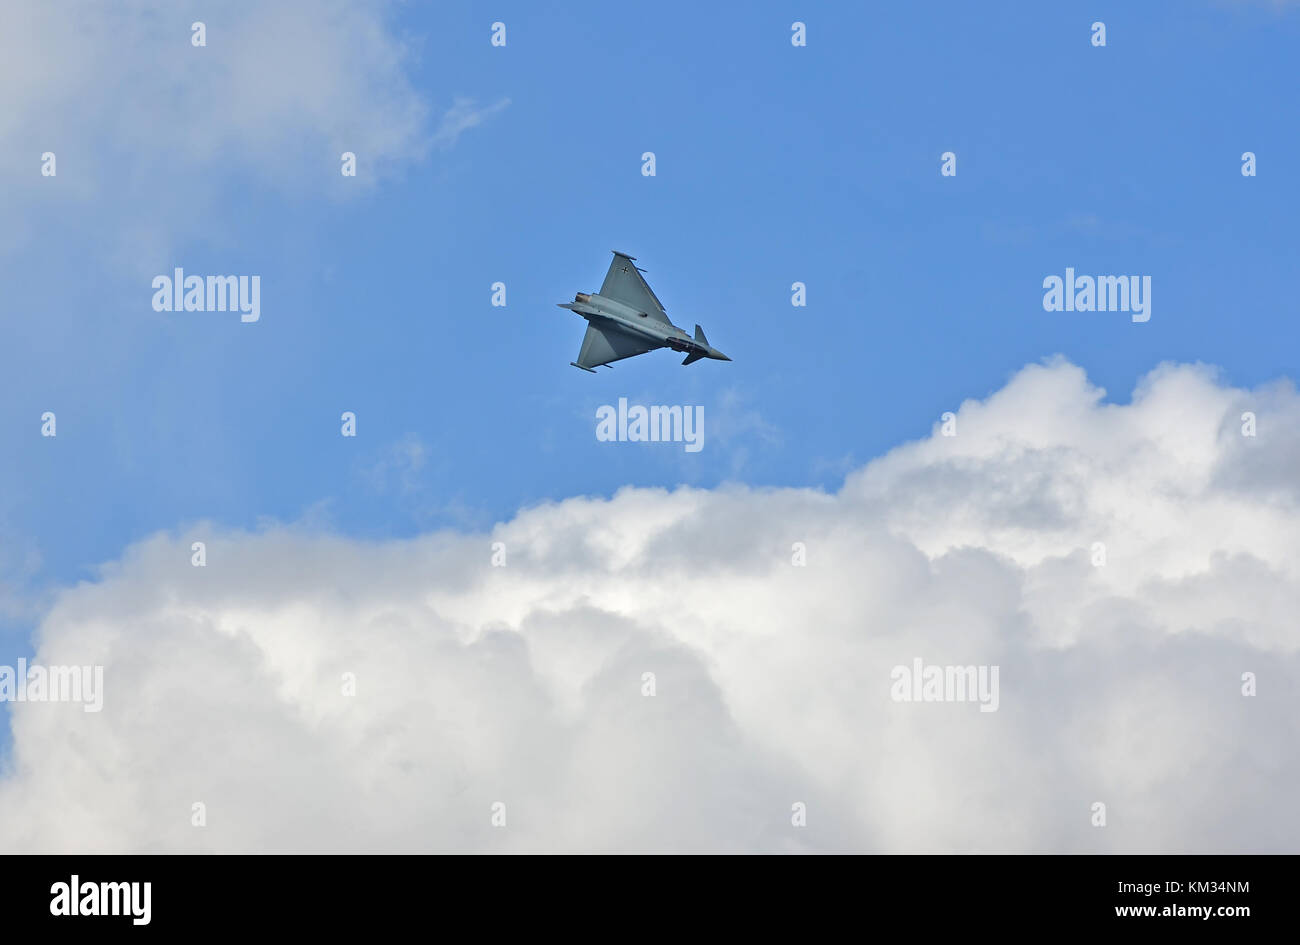 Sion, Suiza - 16 de septiembre: Eurofighter Typhoon;; Gran bretaña; Alemania; fighter; ataque; mrca; bombardero supersónico de ala delta;;;;; tornado de canard leon Foto de stock